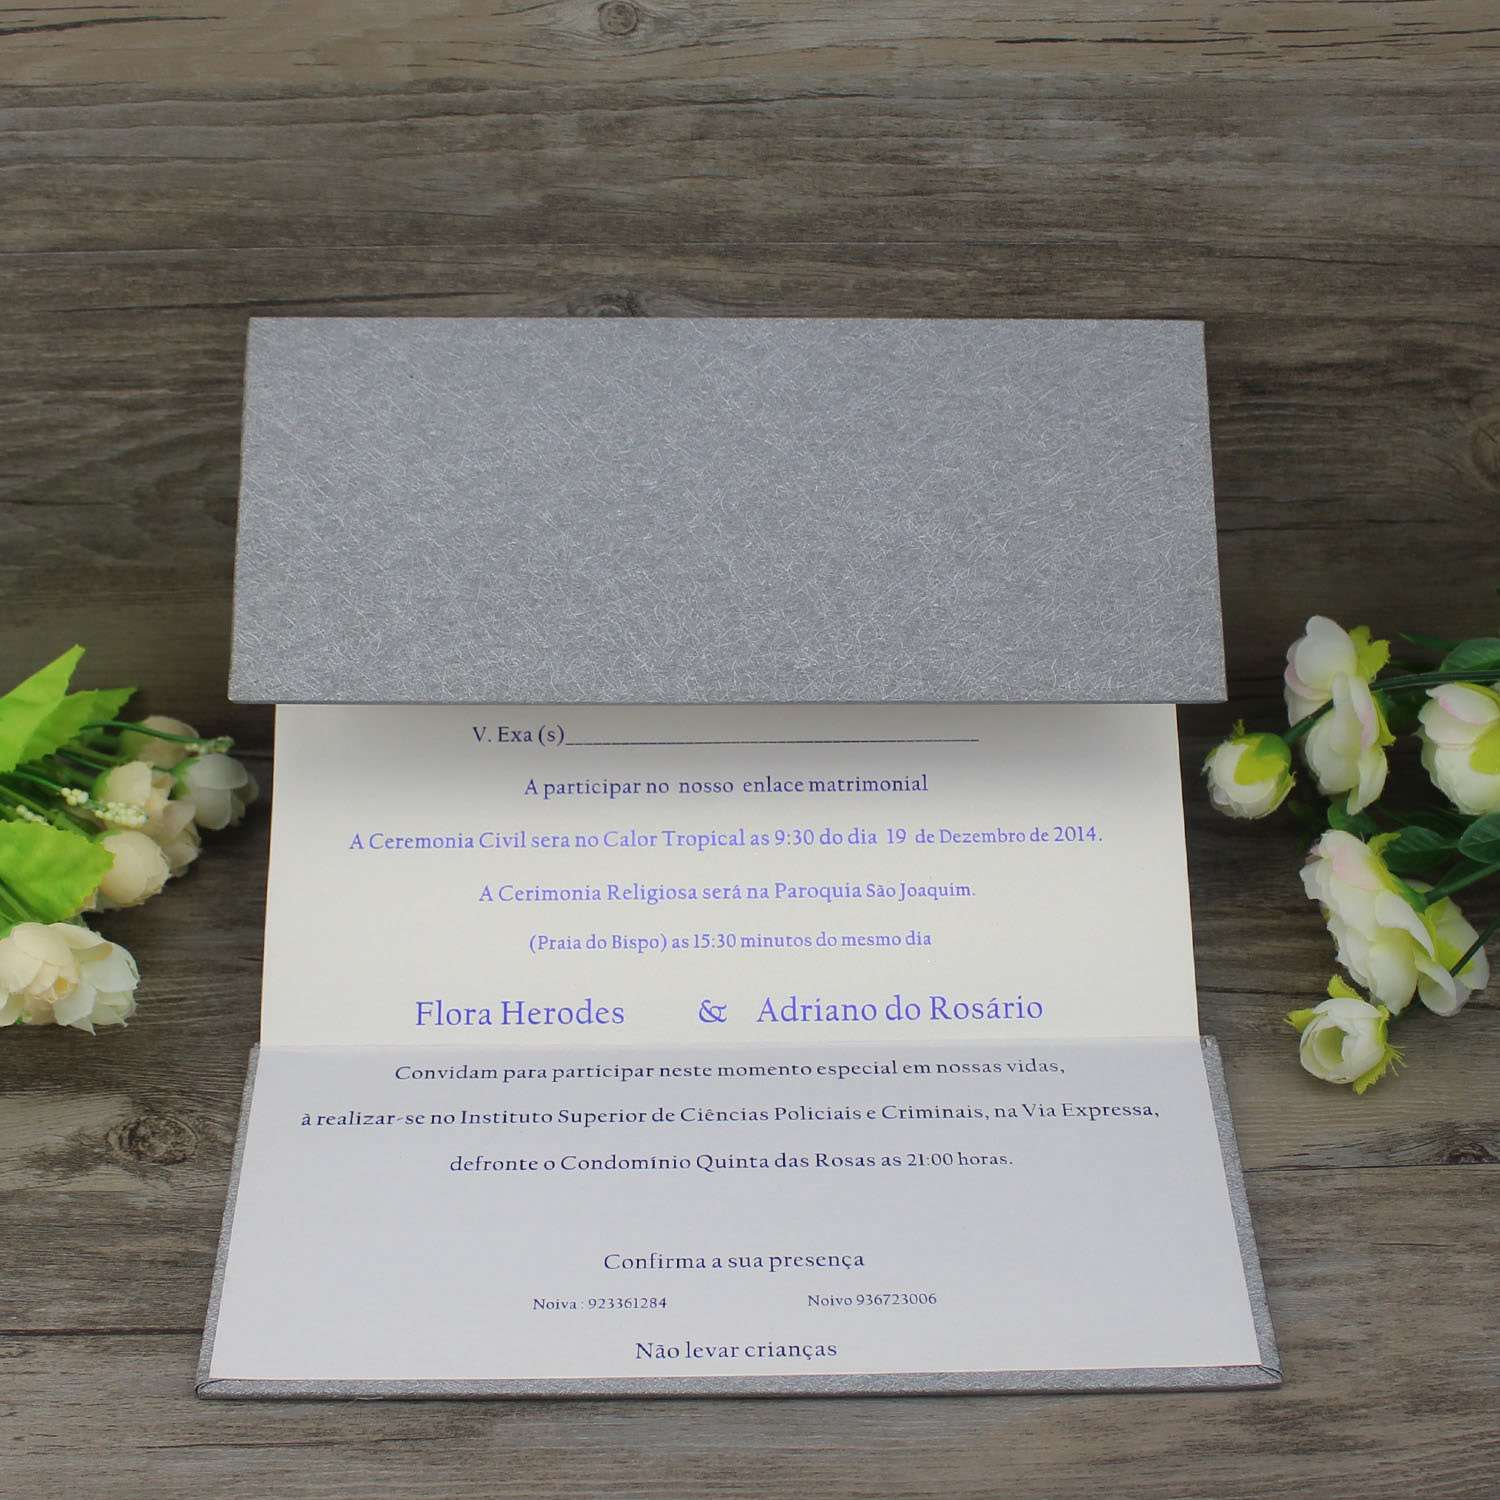 Accordian Fold Invitation  Card Hardcover Wedding Card Rectangle Printing Customized 